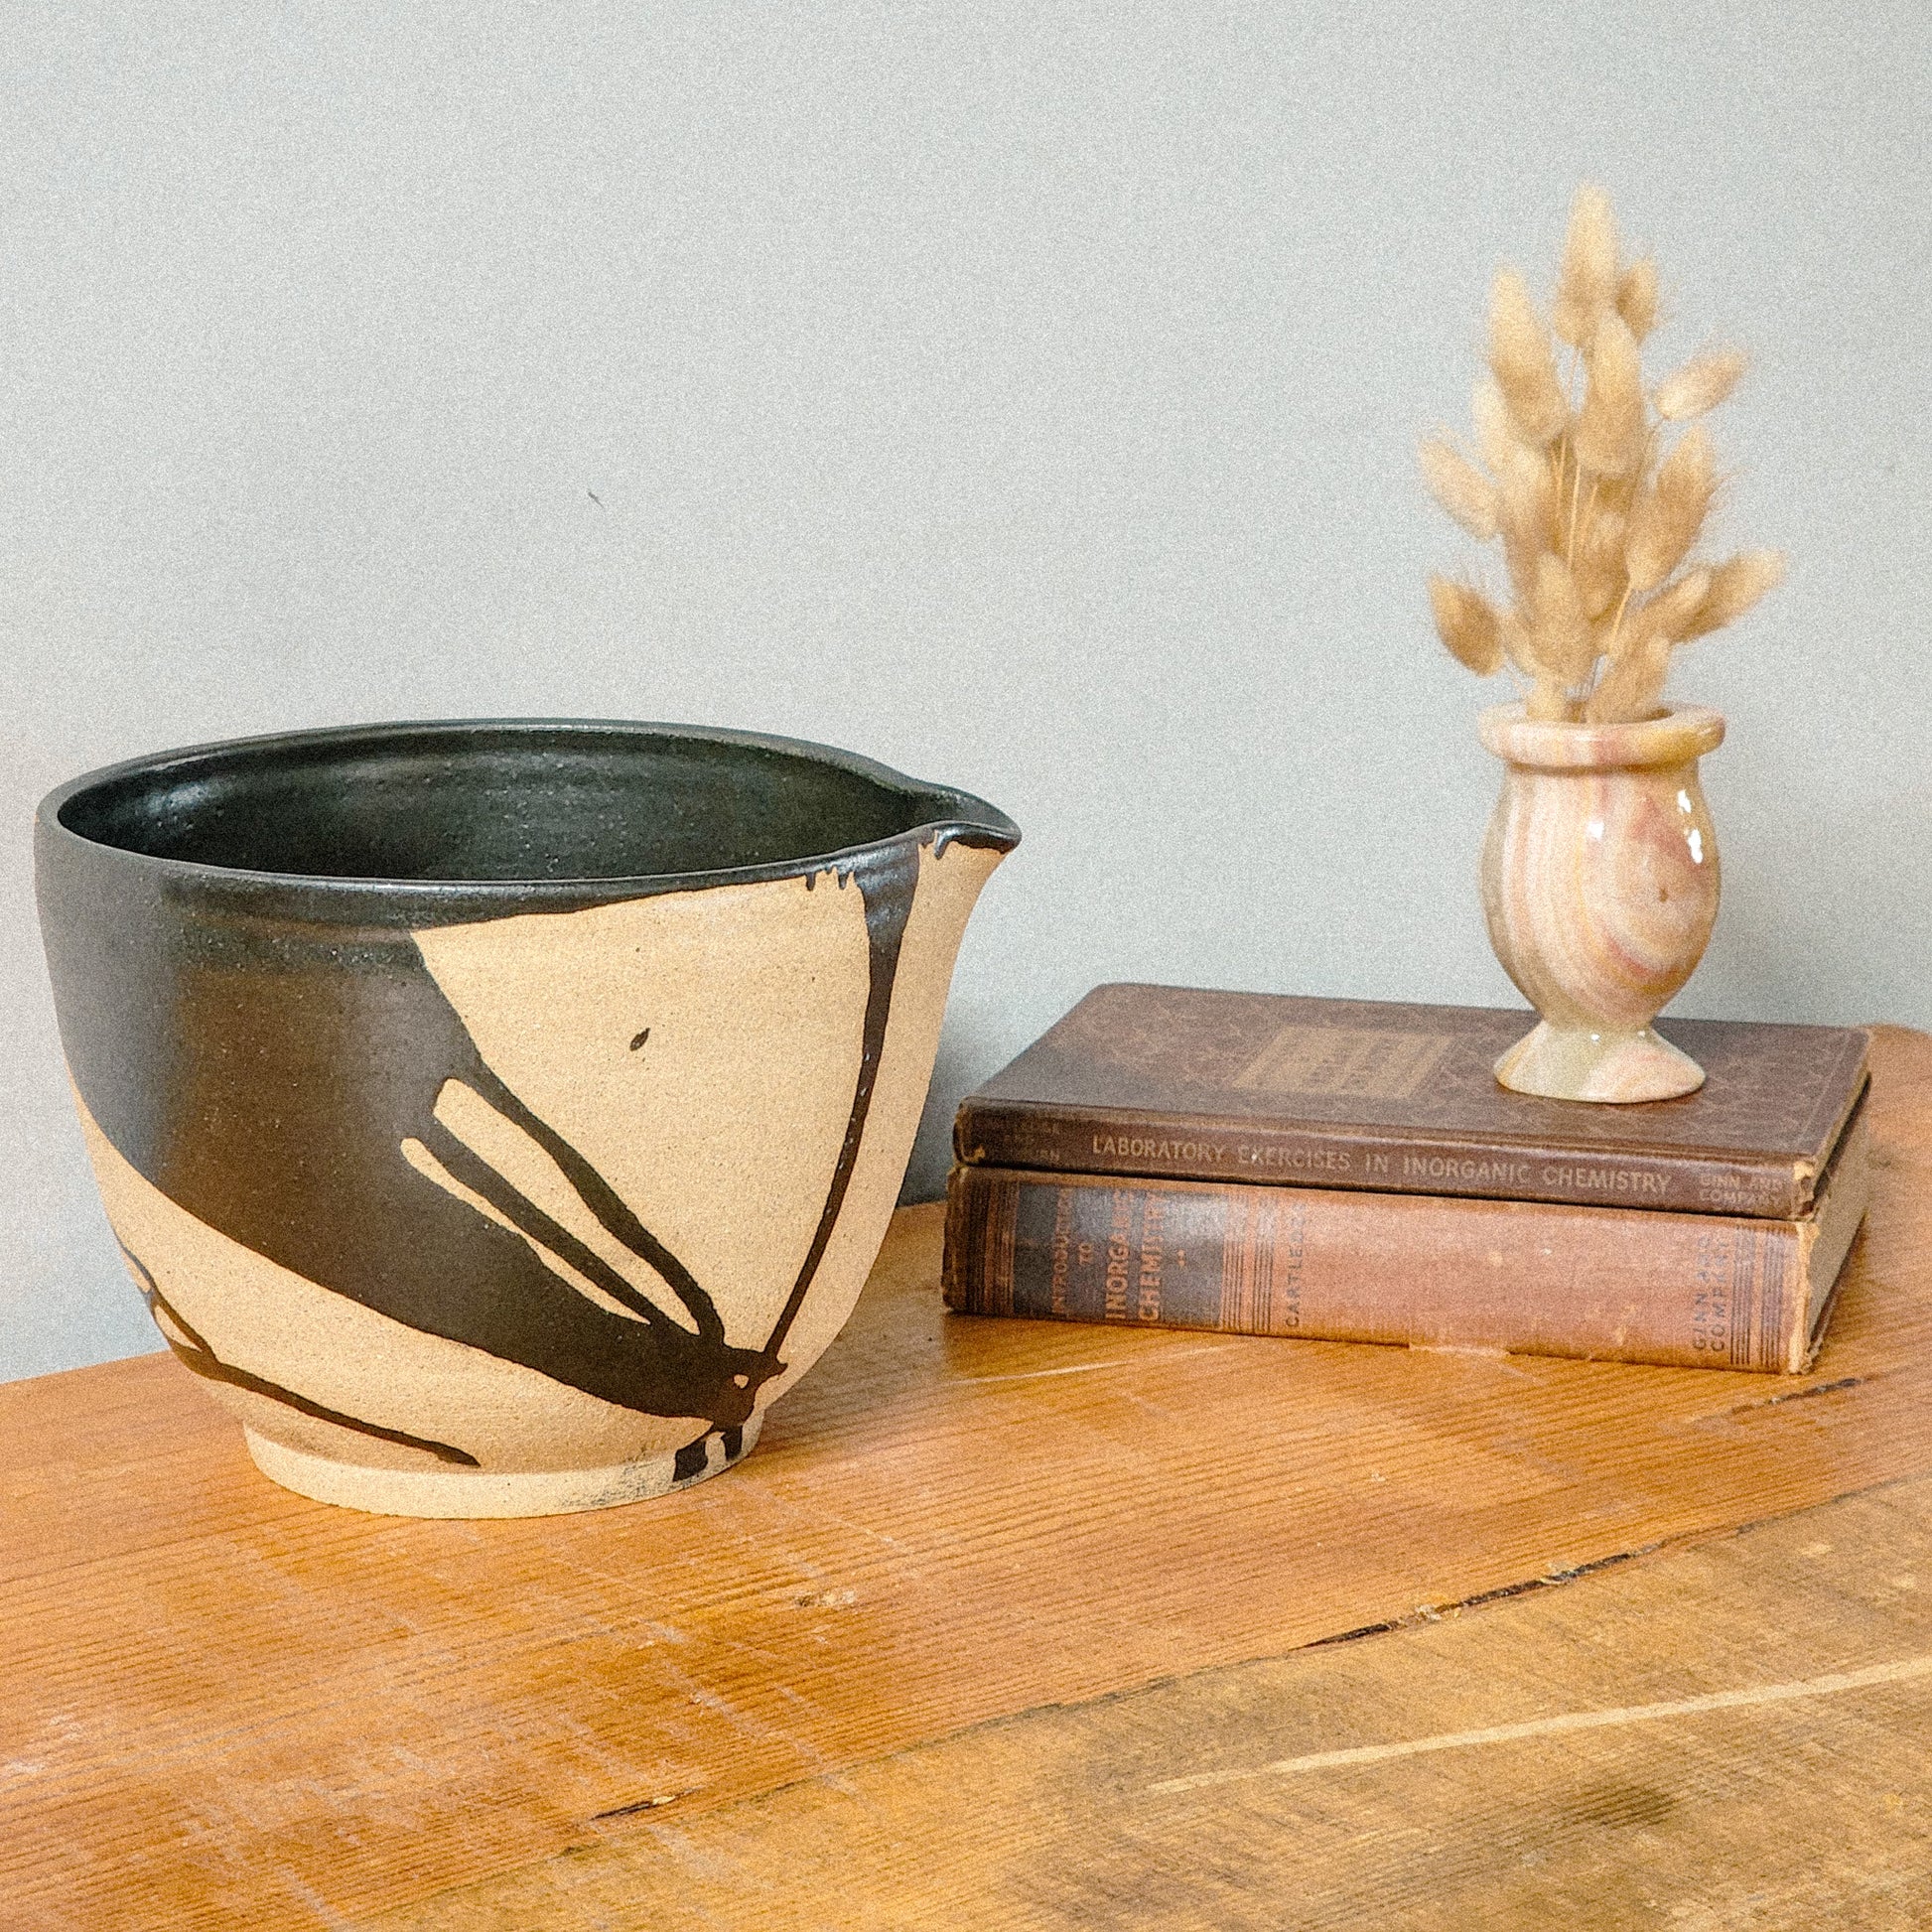 XL Studio Pottery Mixing Bowl - Reclaimed Mt. Goods